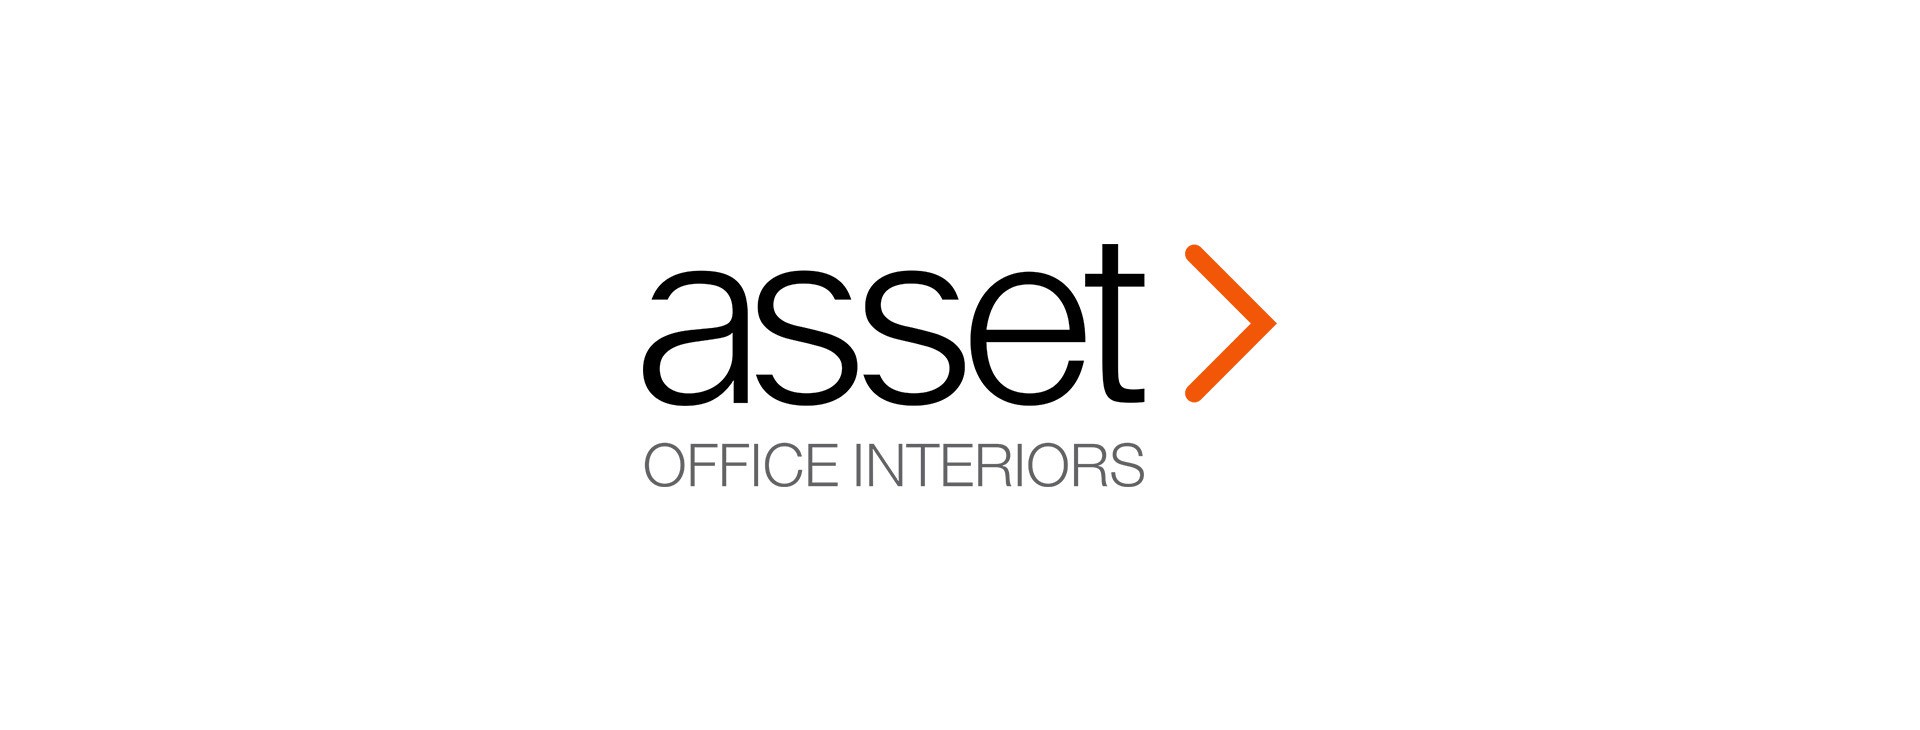 Asset Office Interiors - Corporate Identity